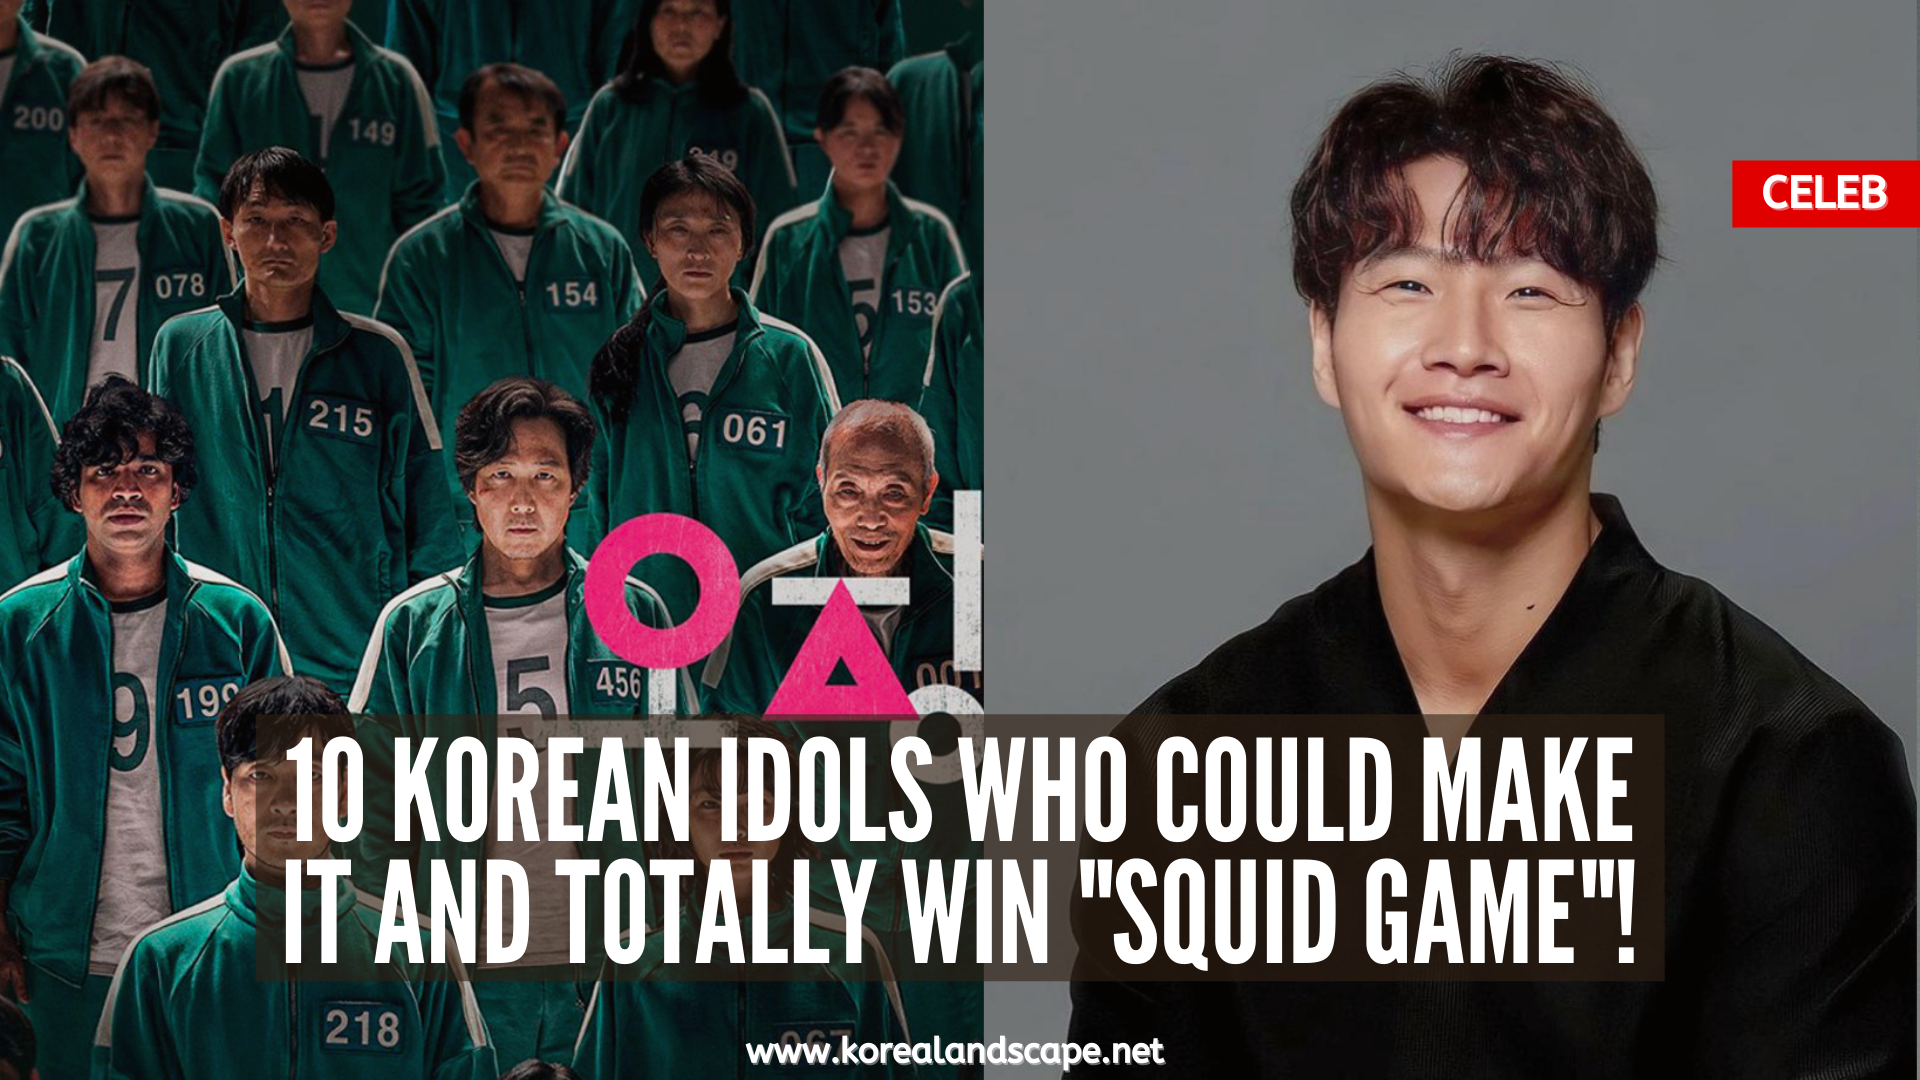 squid game korean idol